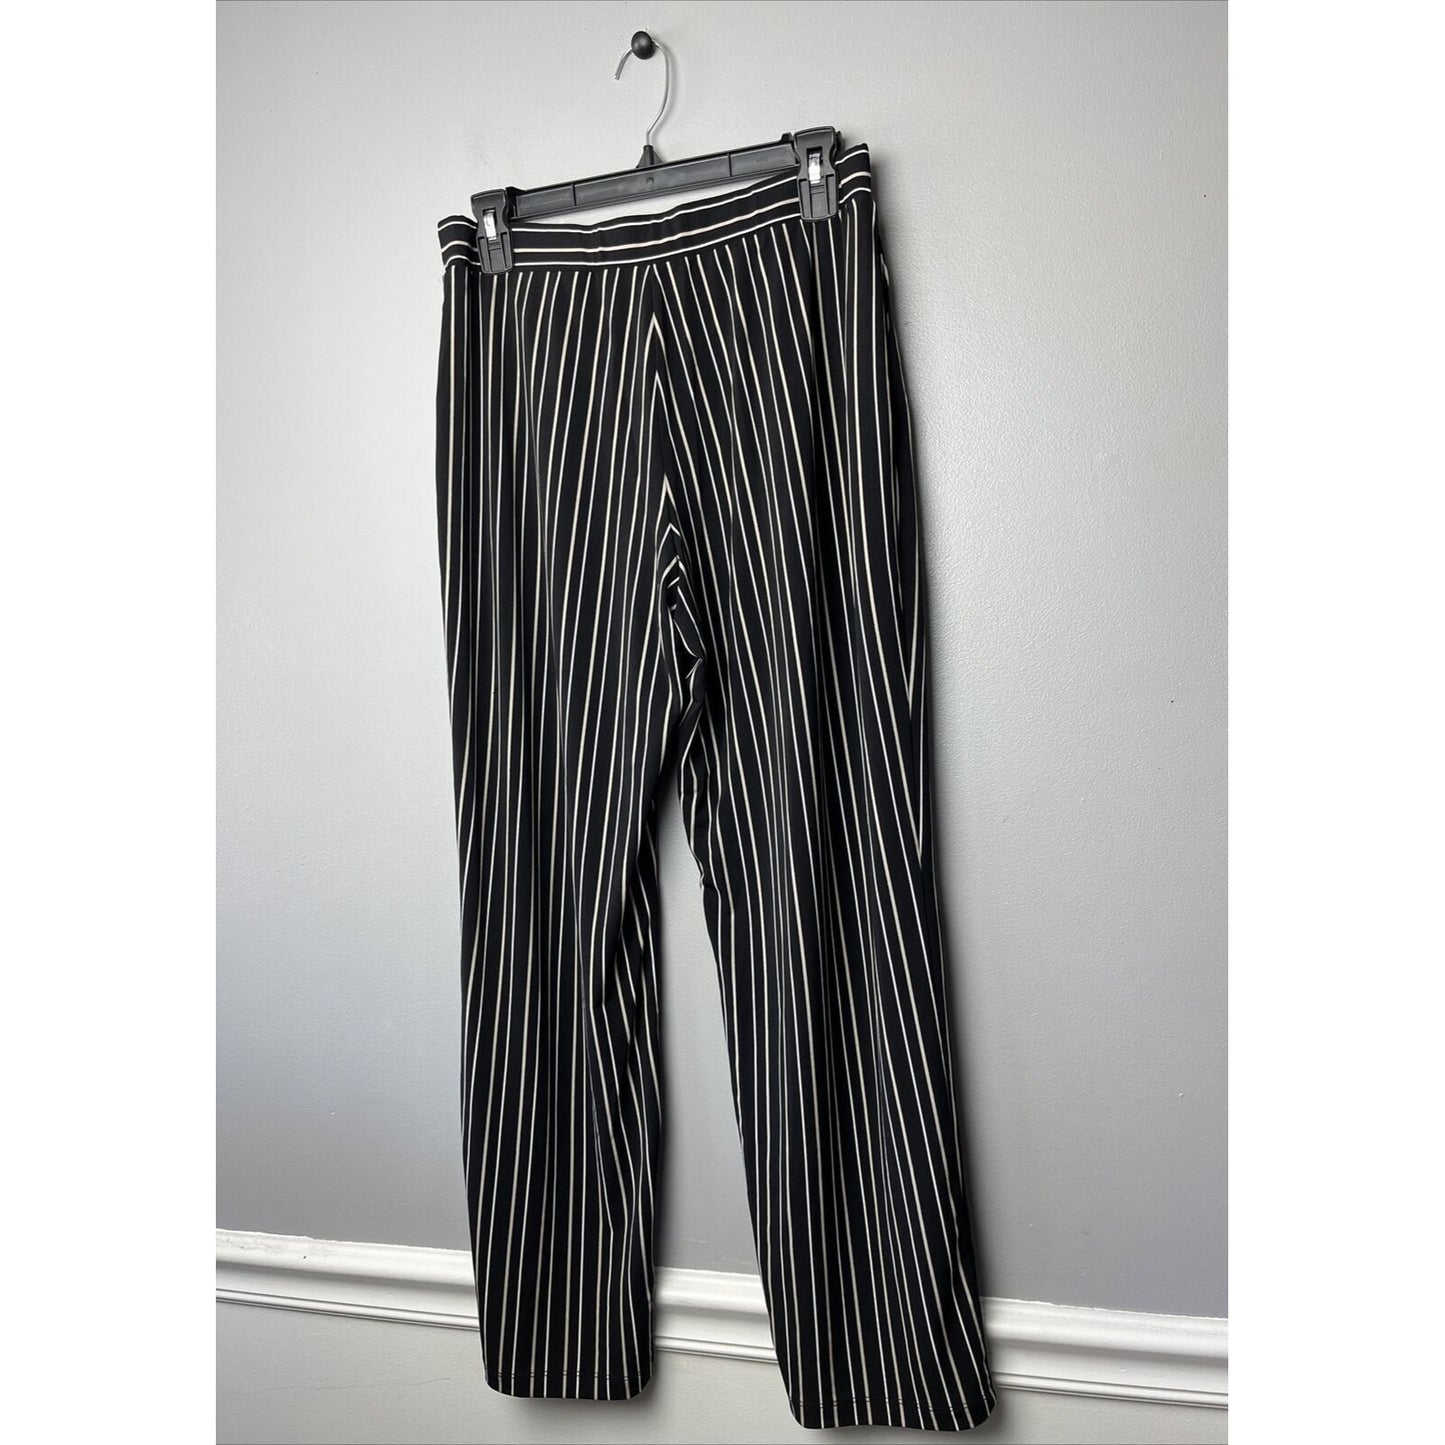 Susan Graver Regular Printed Liquid Knit Pull-On Pants - Black Stripe Petite S